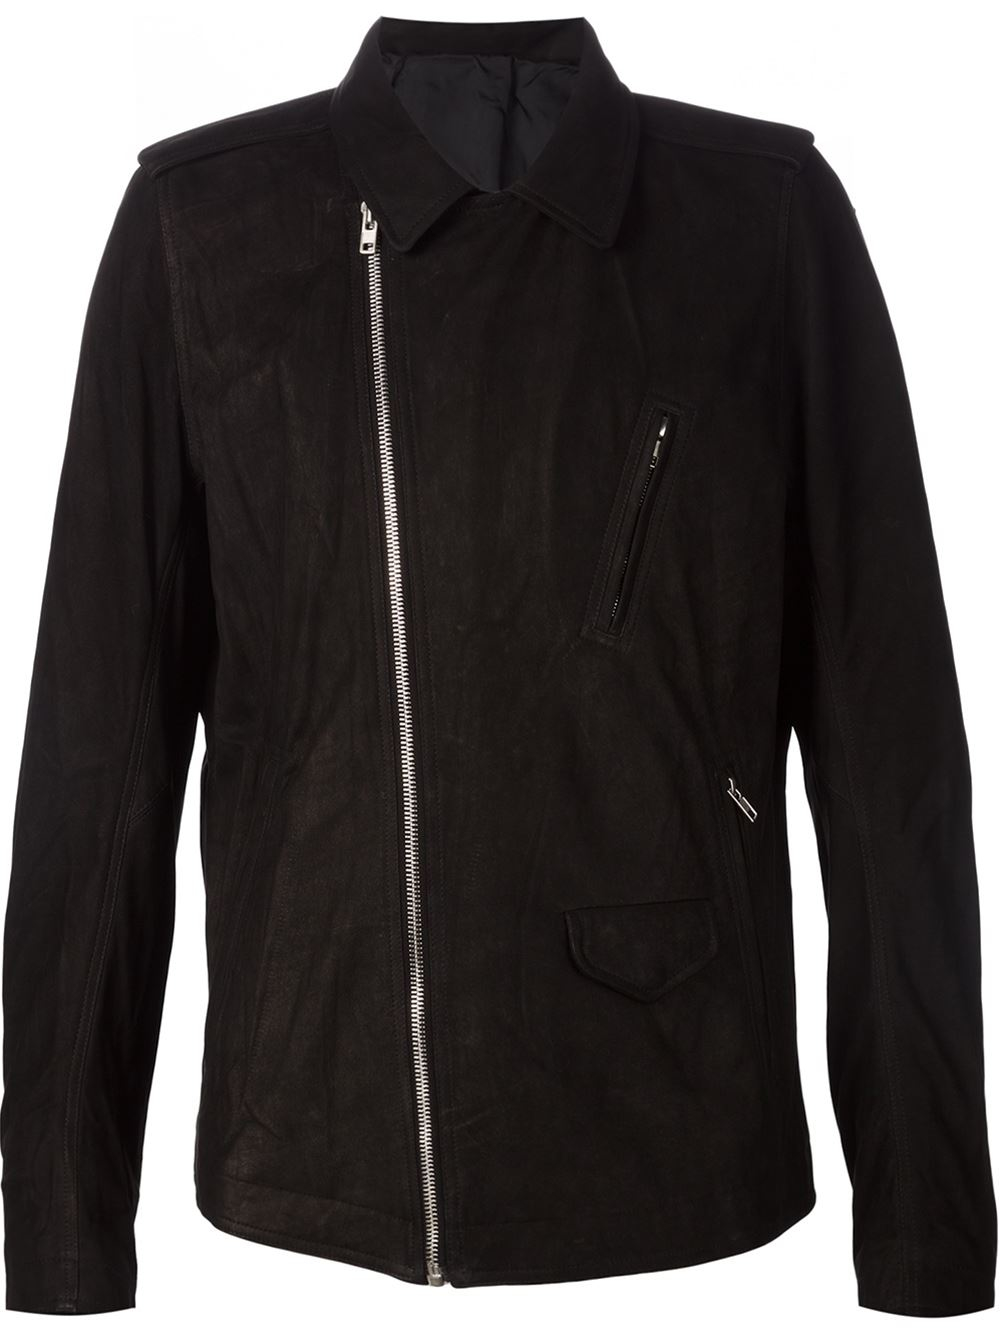 Lyst - Rick Owens Cutaway Collar Jacket in Black for Men